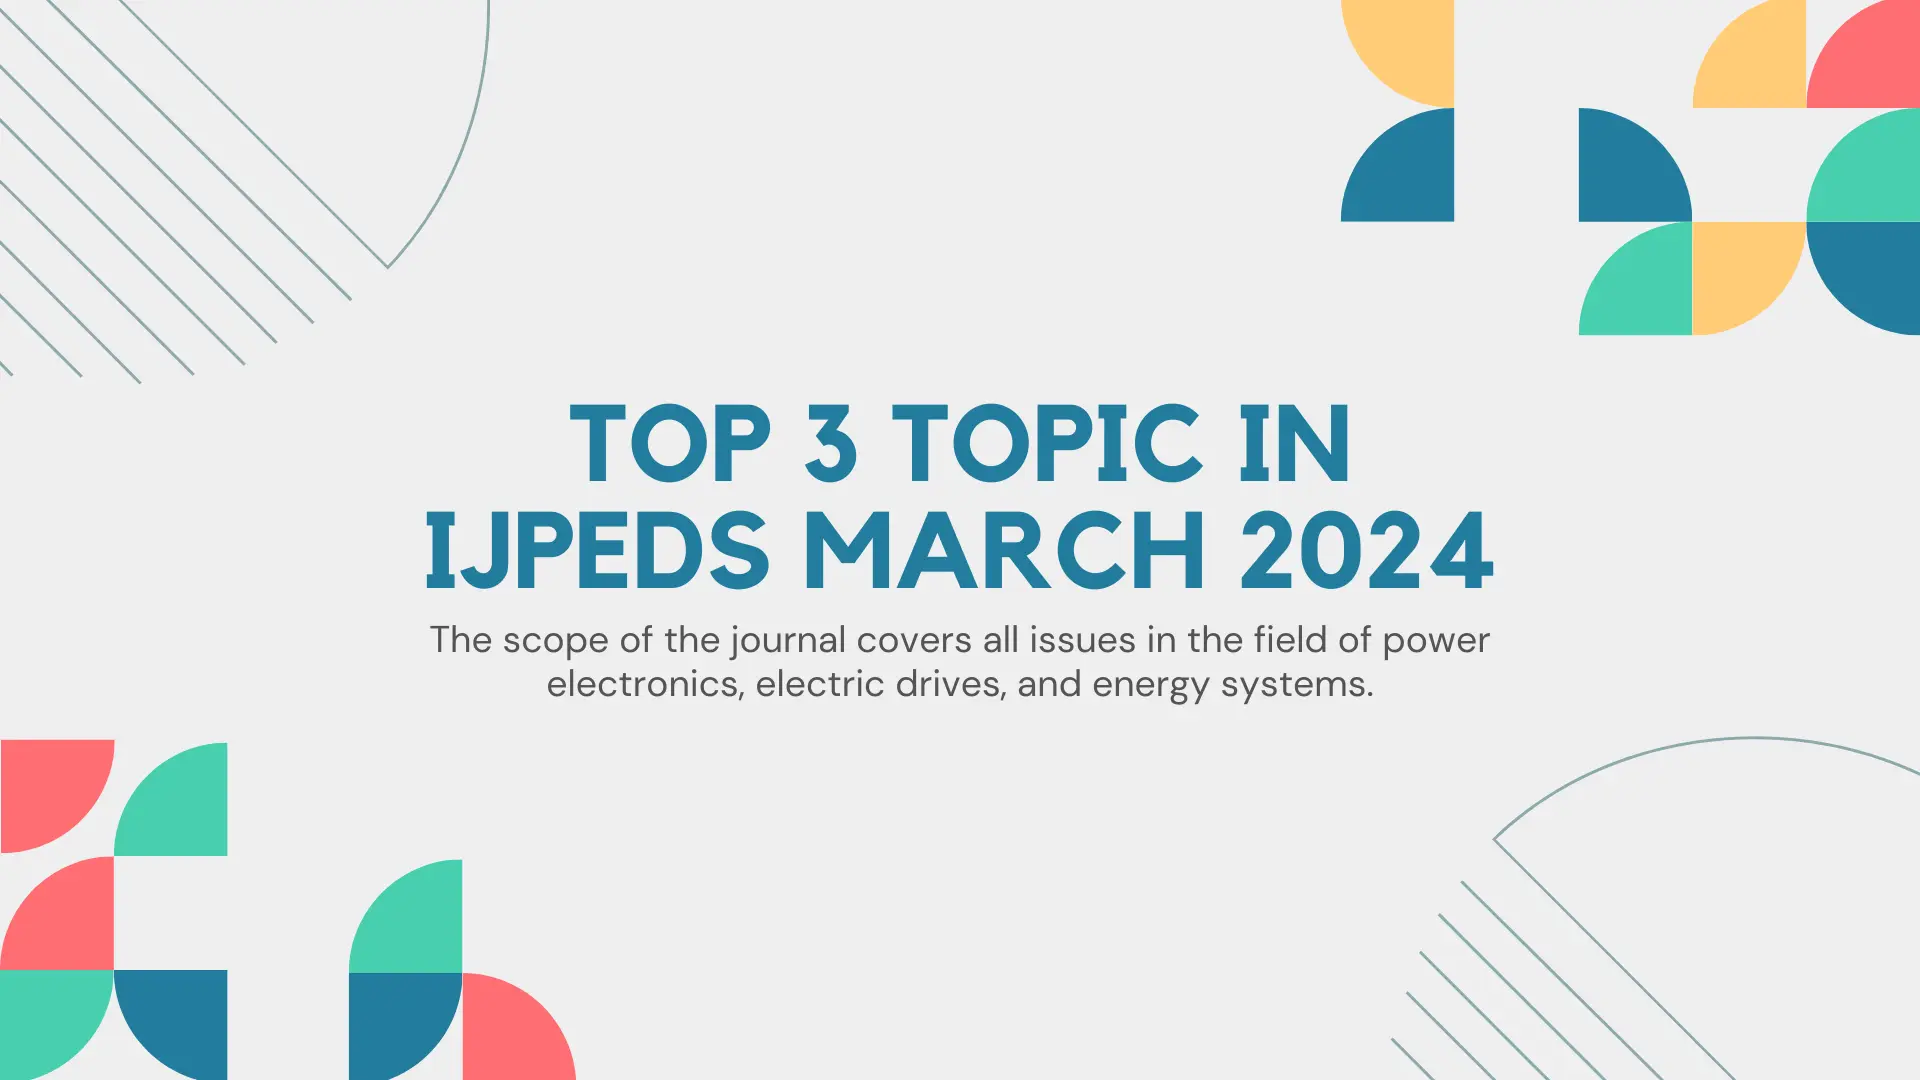 Top 3 topics in IJPEDS March 2024 